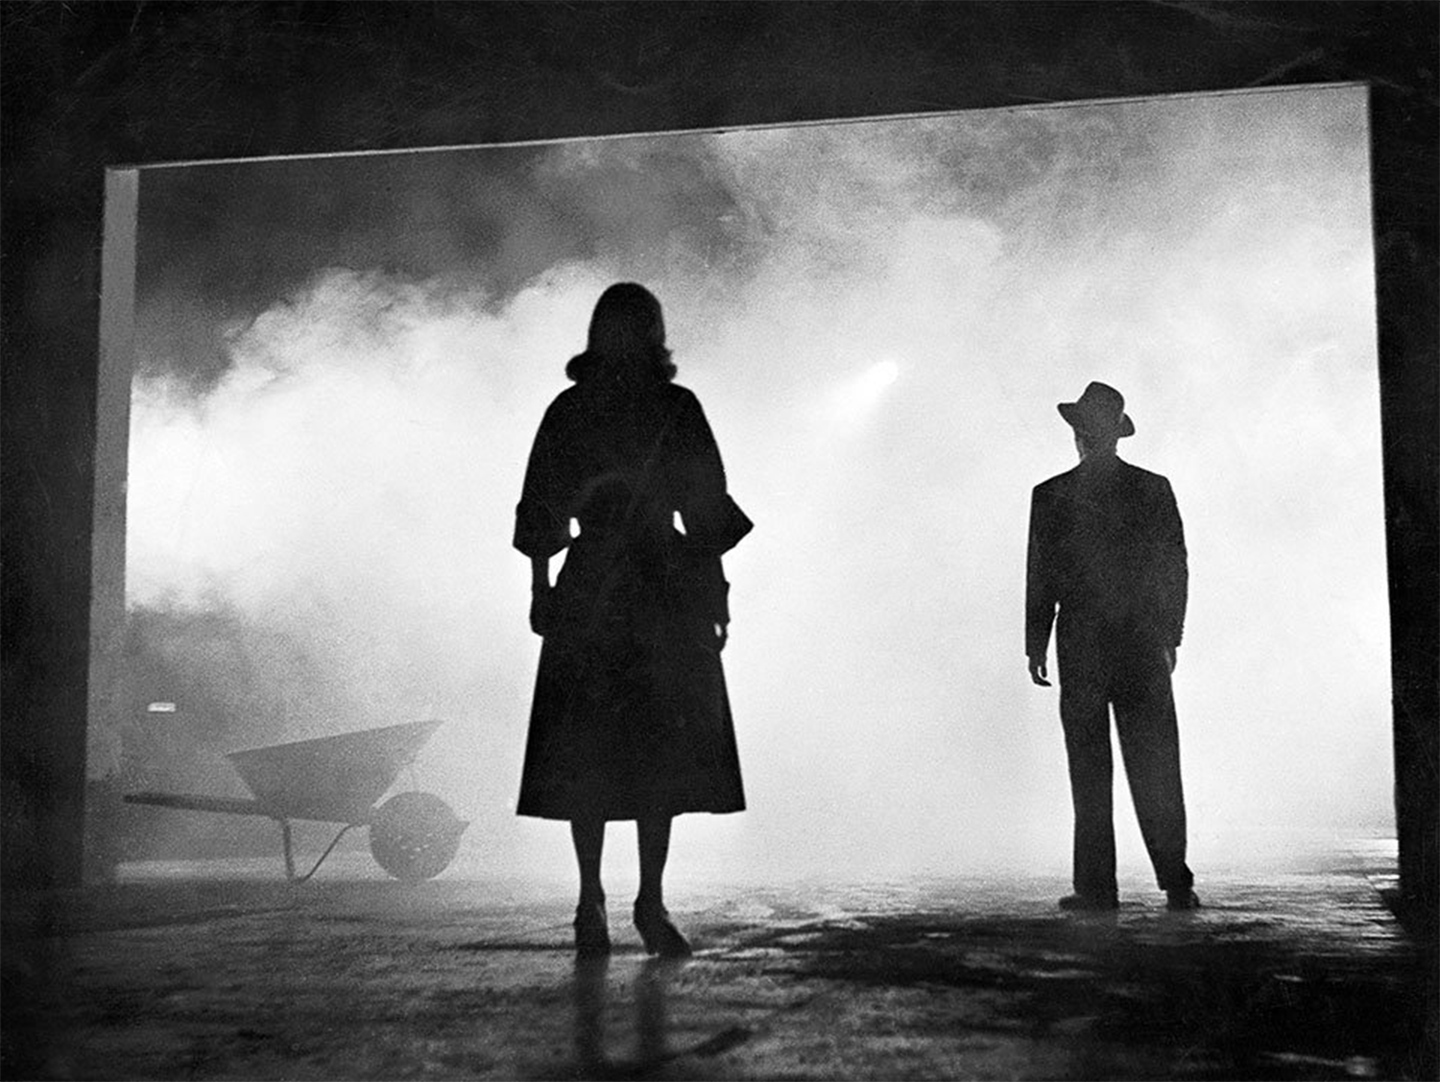 film noir photography lighting